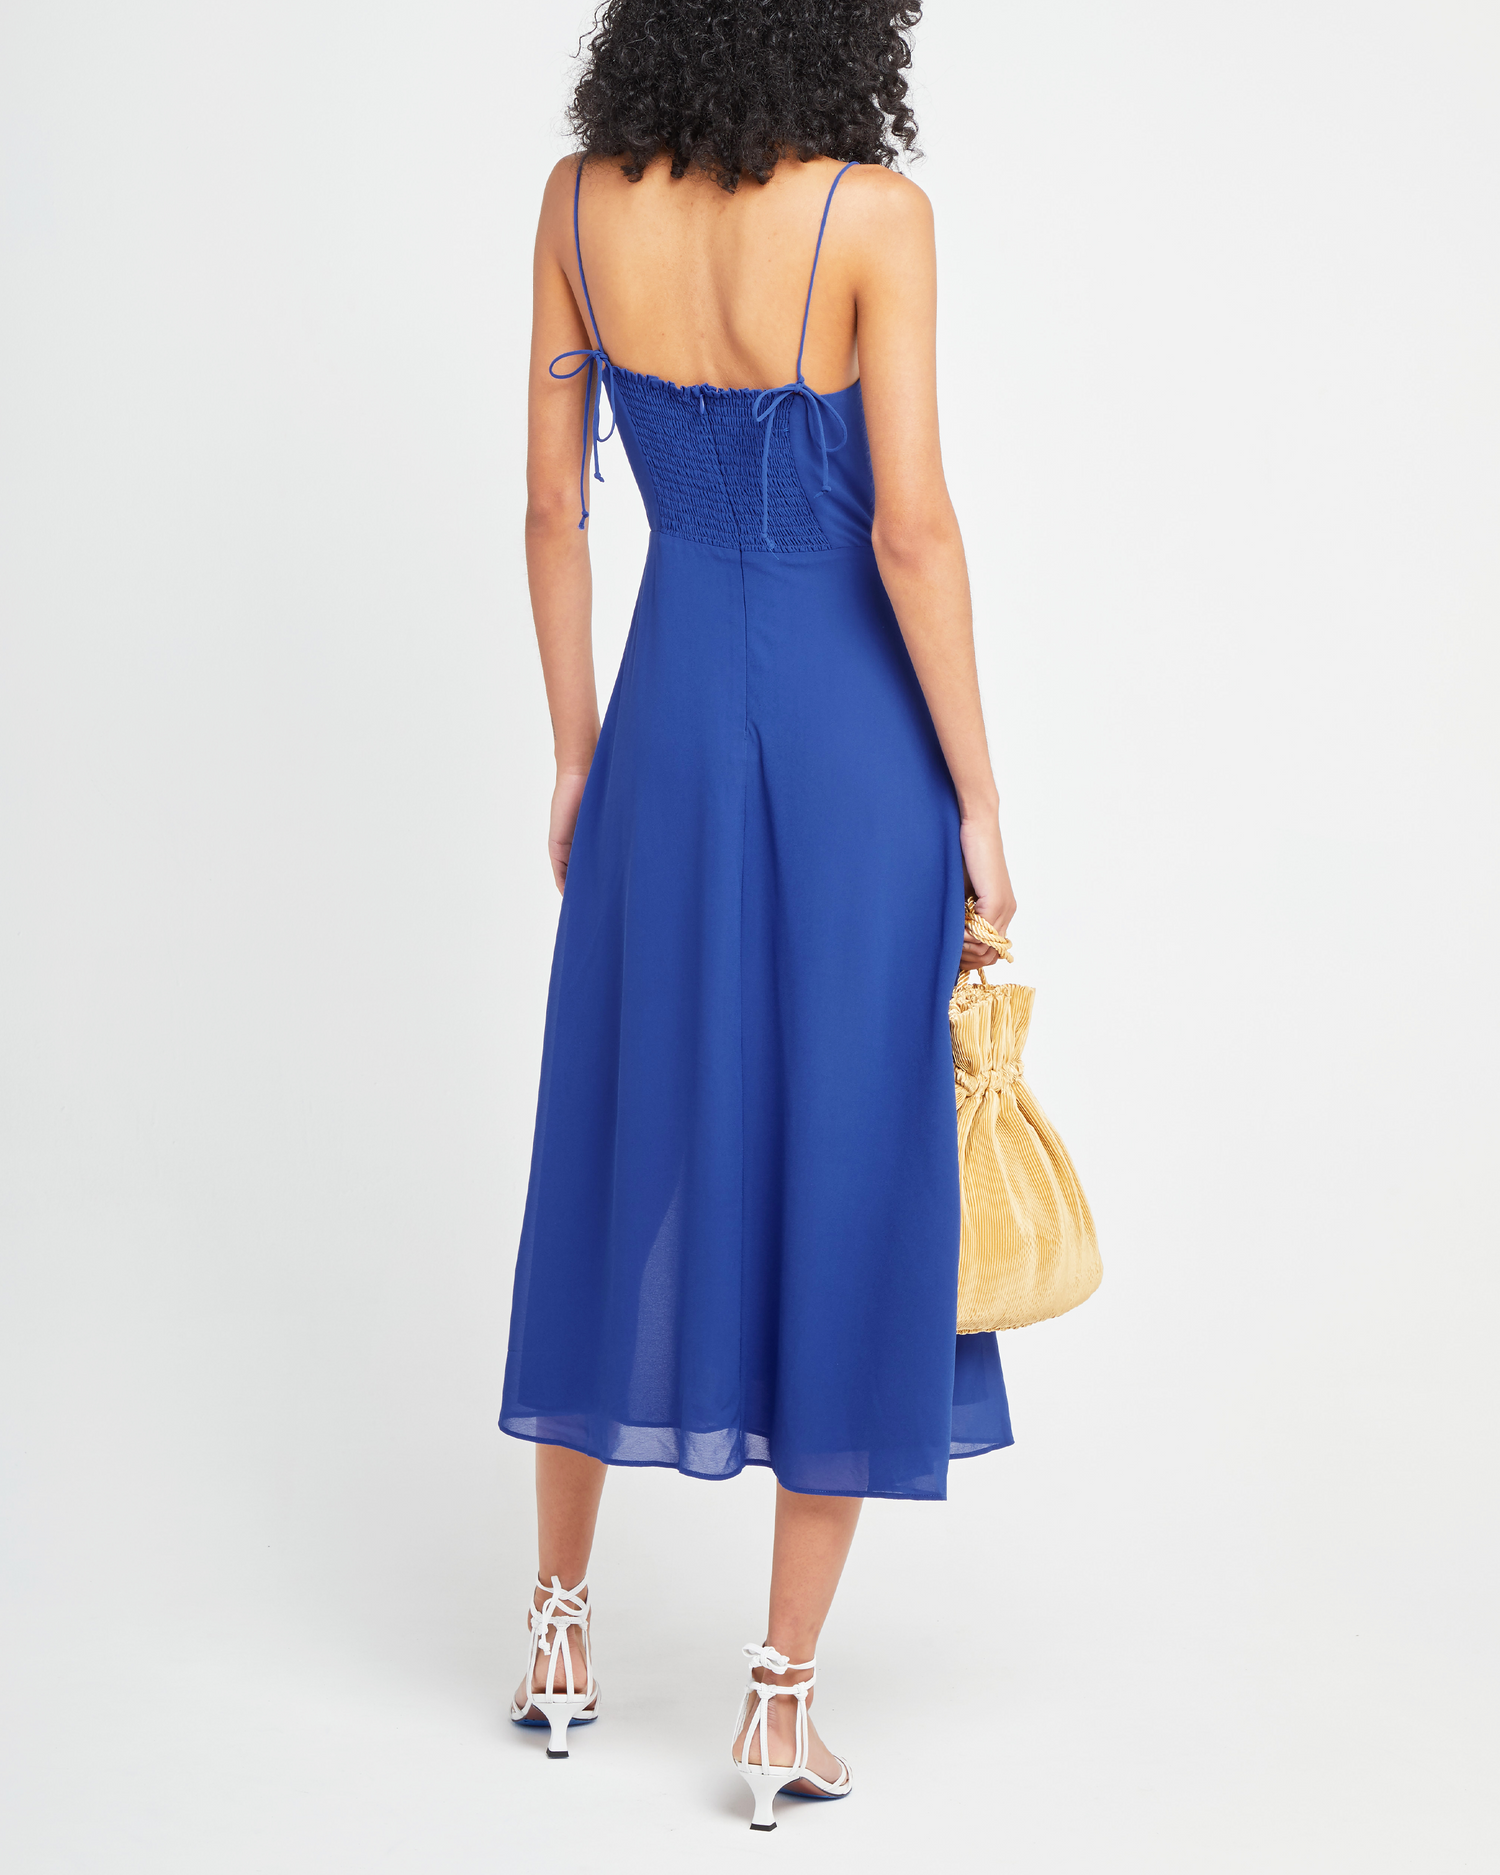 Second image of Venus Dress, a blue midi dress, tie straps, spaghetti straps, side slit, bodice